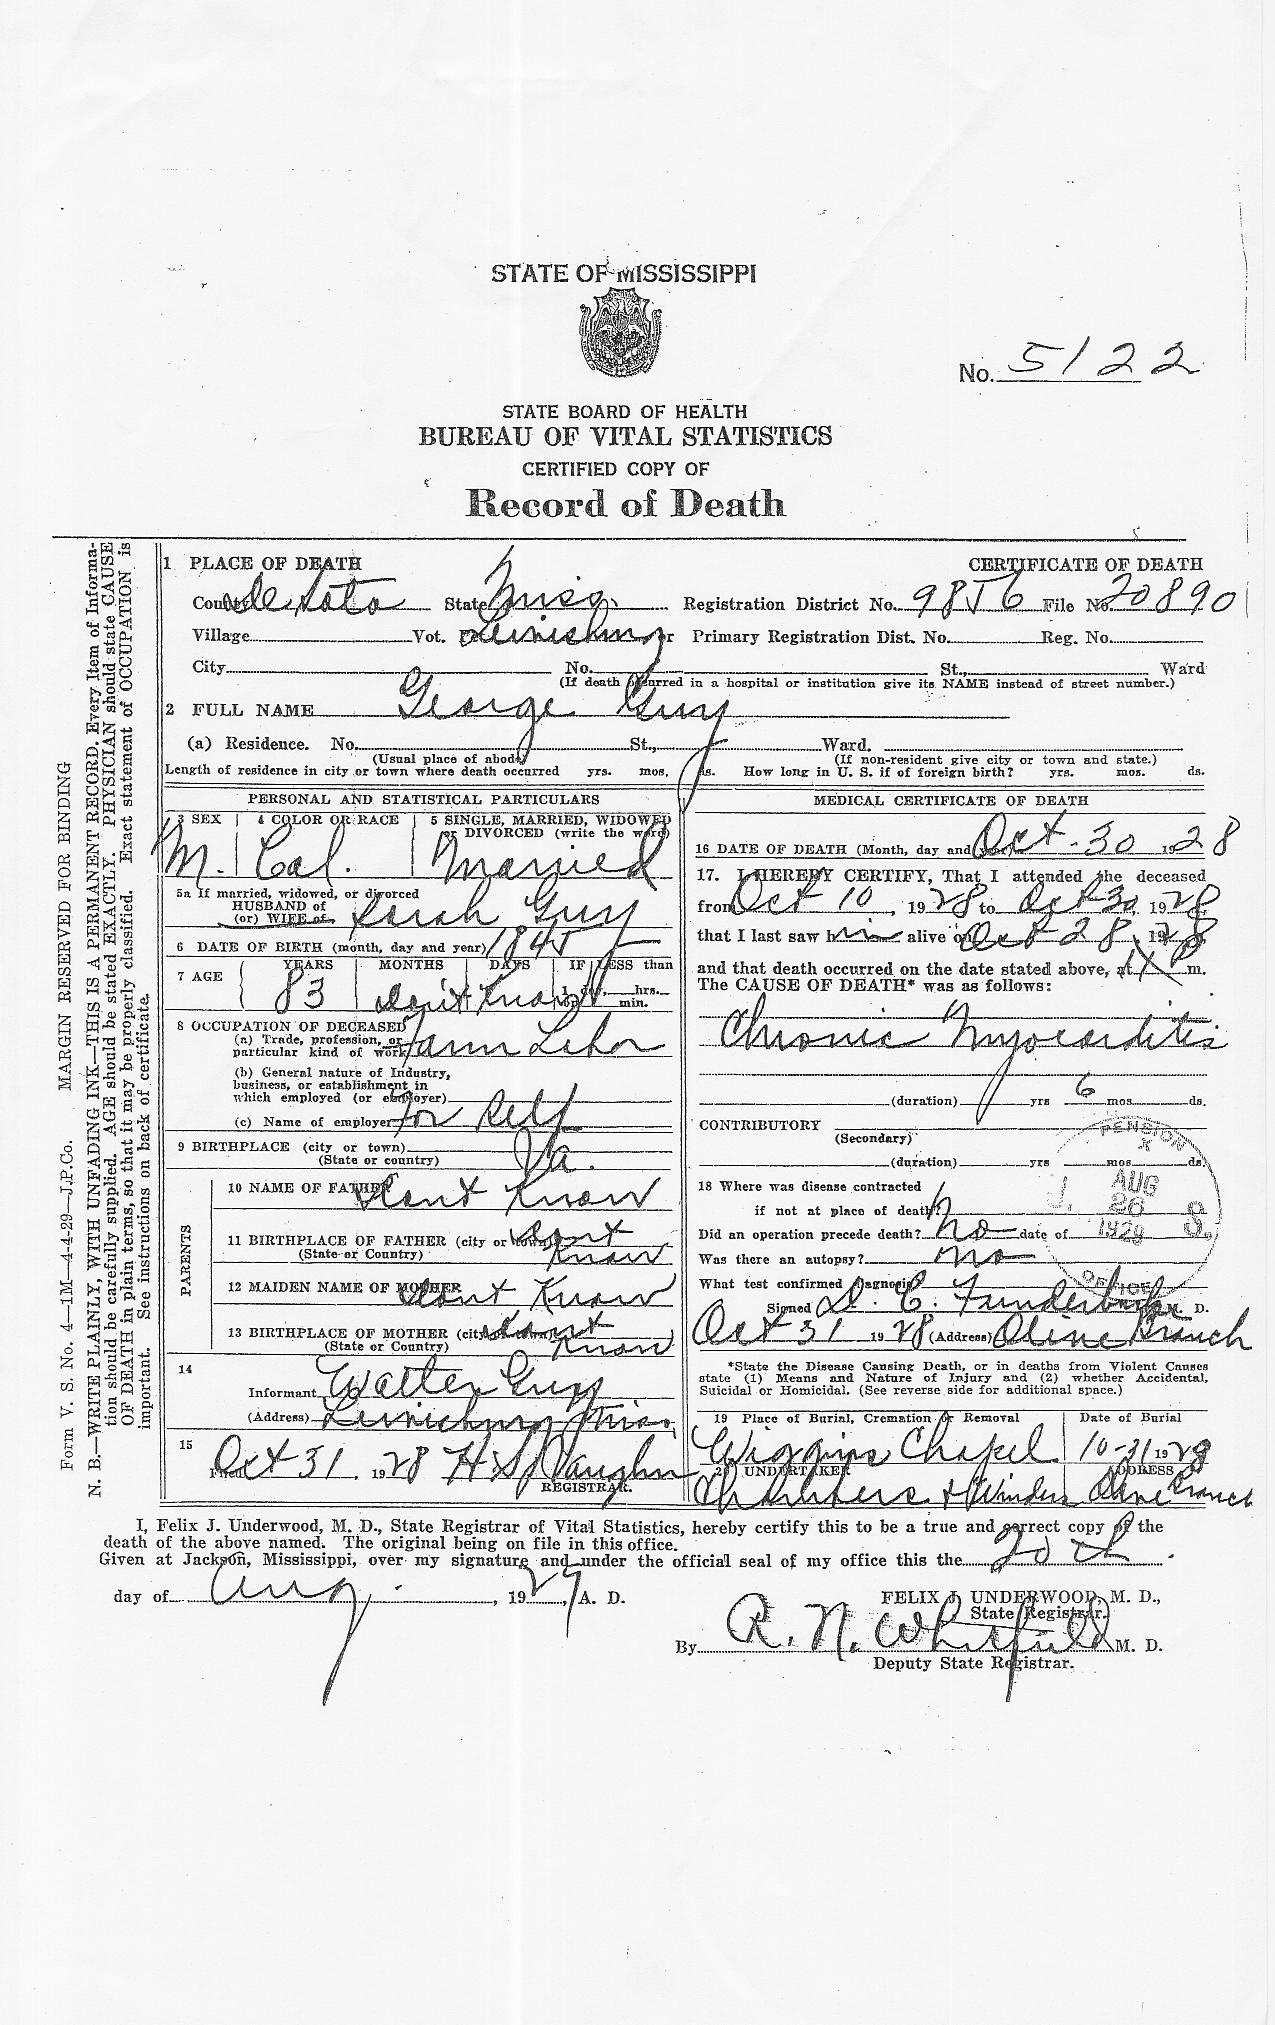 George Guy's Death Certificate